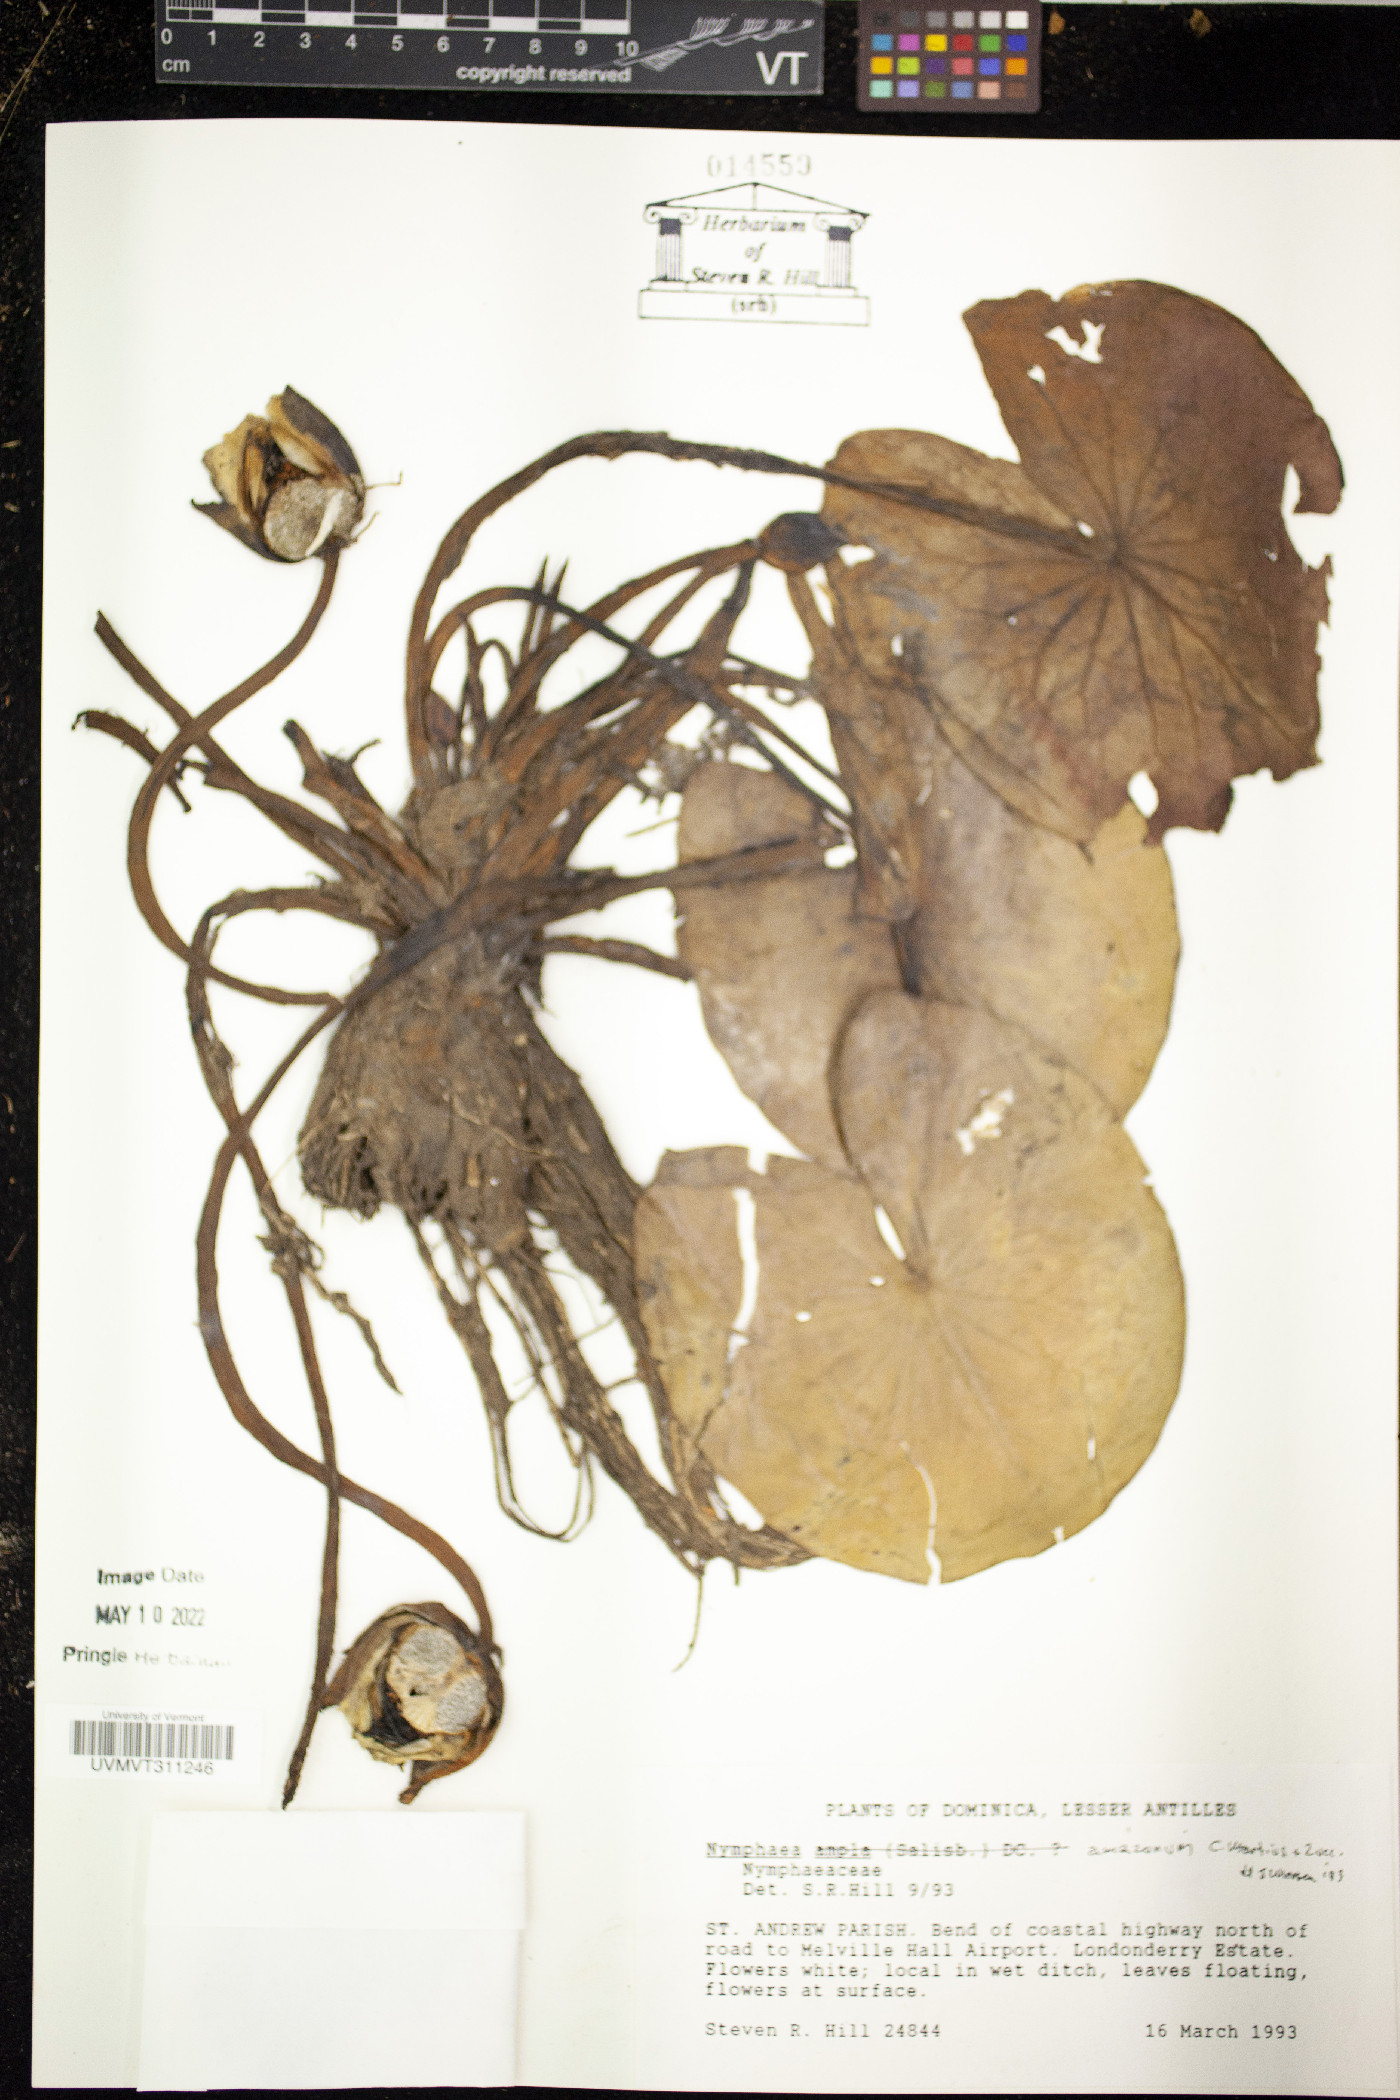 Nymphaea amazonum image